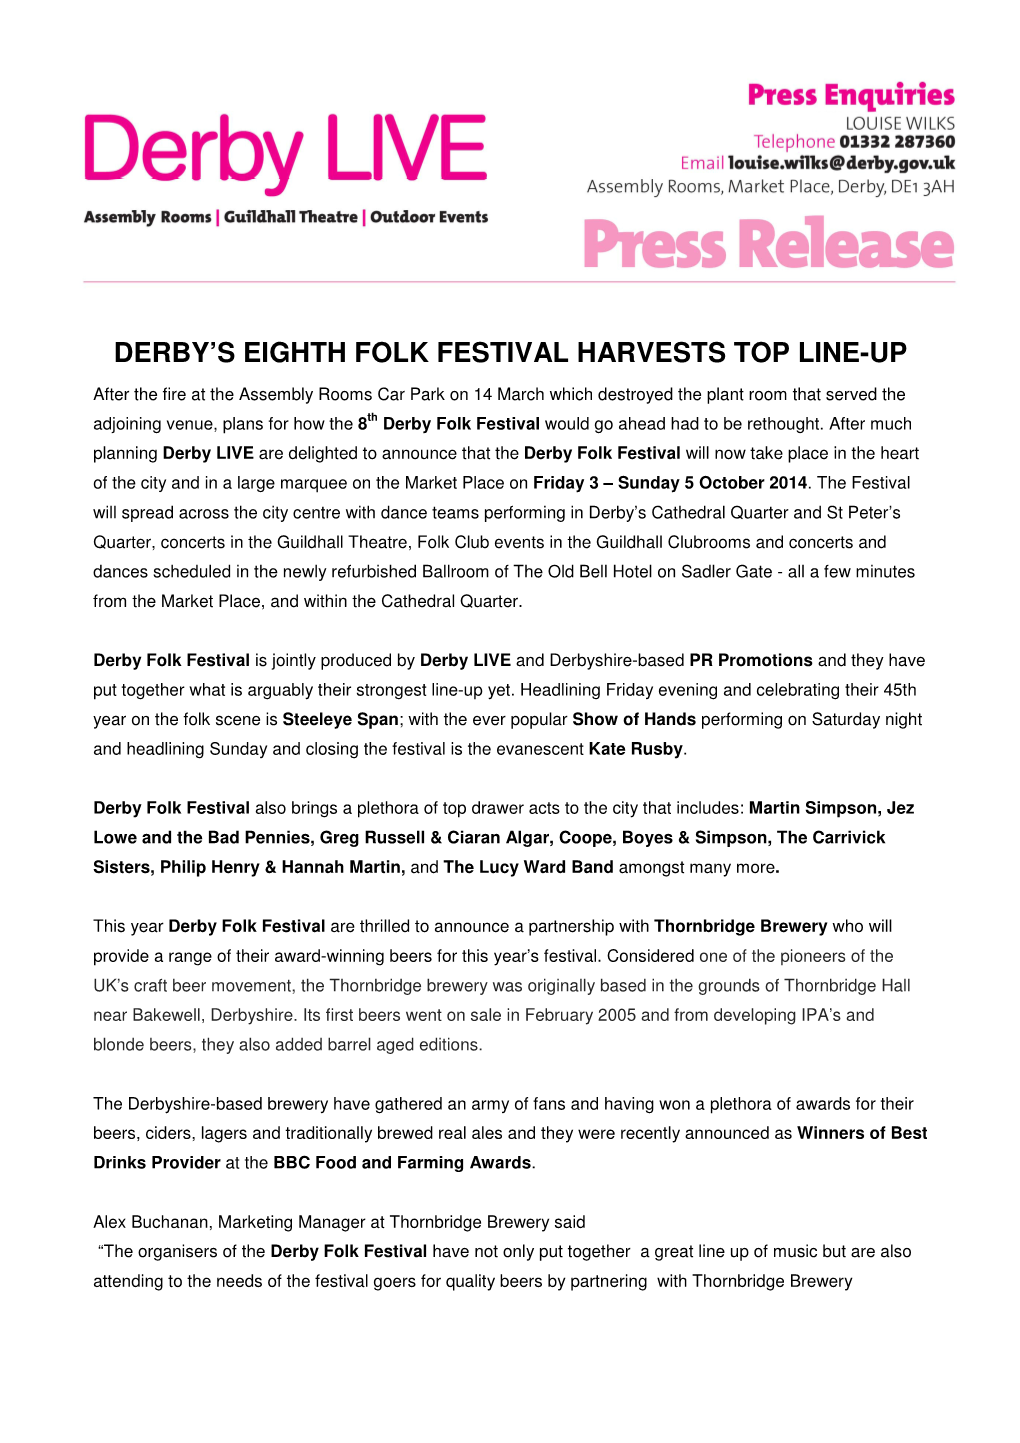 Derby's Eighth Folk Festival Harvests Top Line-Up